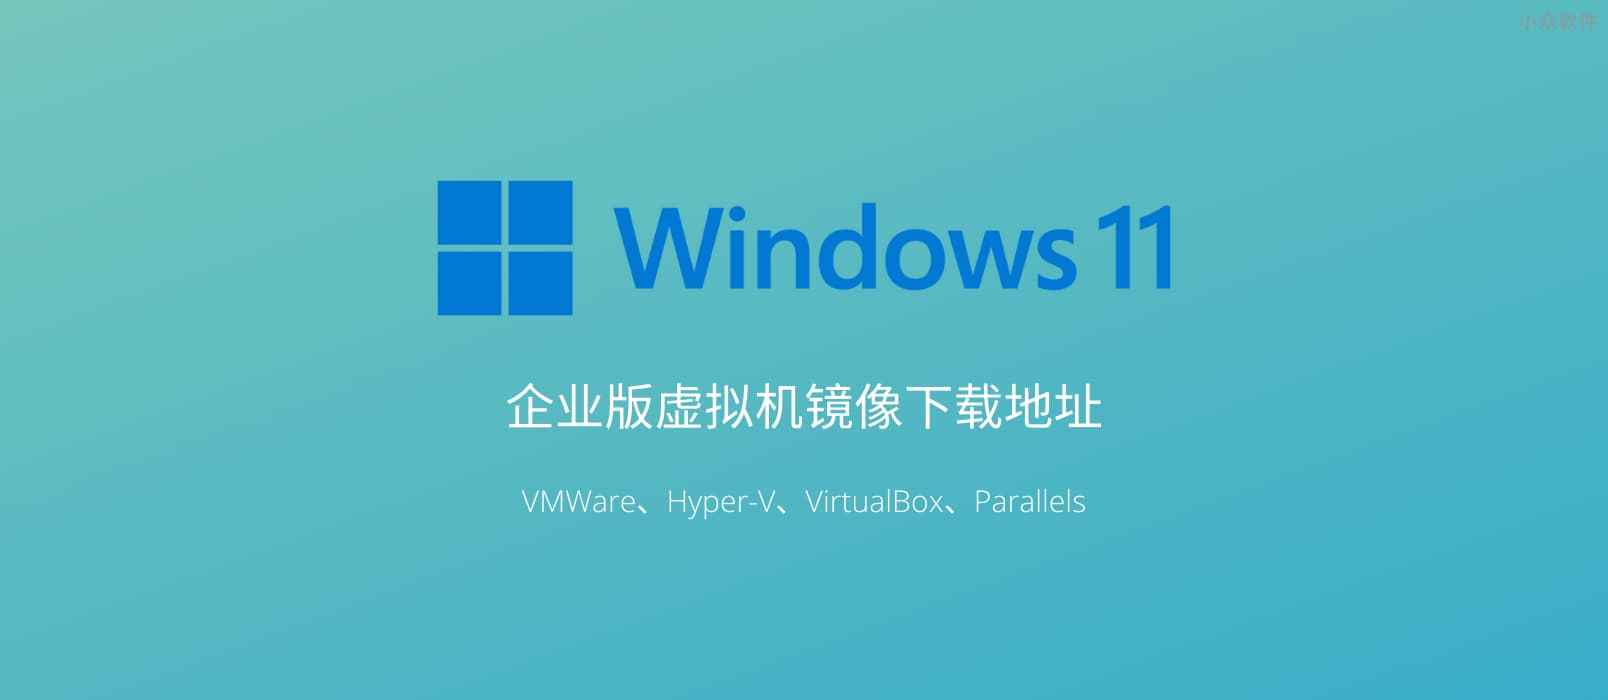 Windows 11 企业版虚拟机镜像文件下载地址，支持 VMWare、Hyper-V、VirtualBox、Parallels